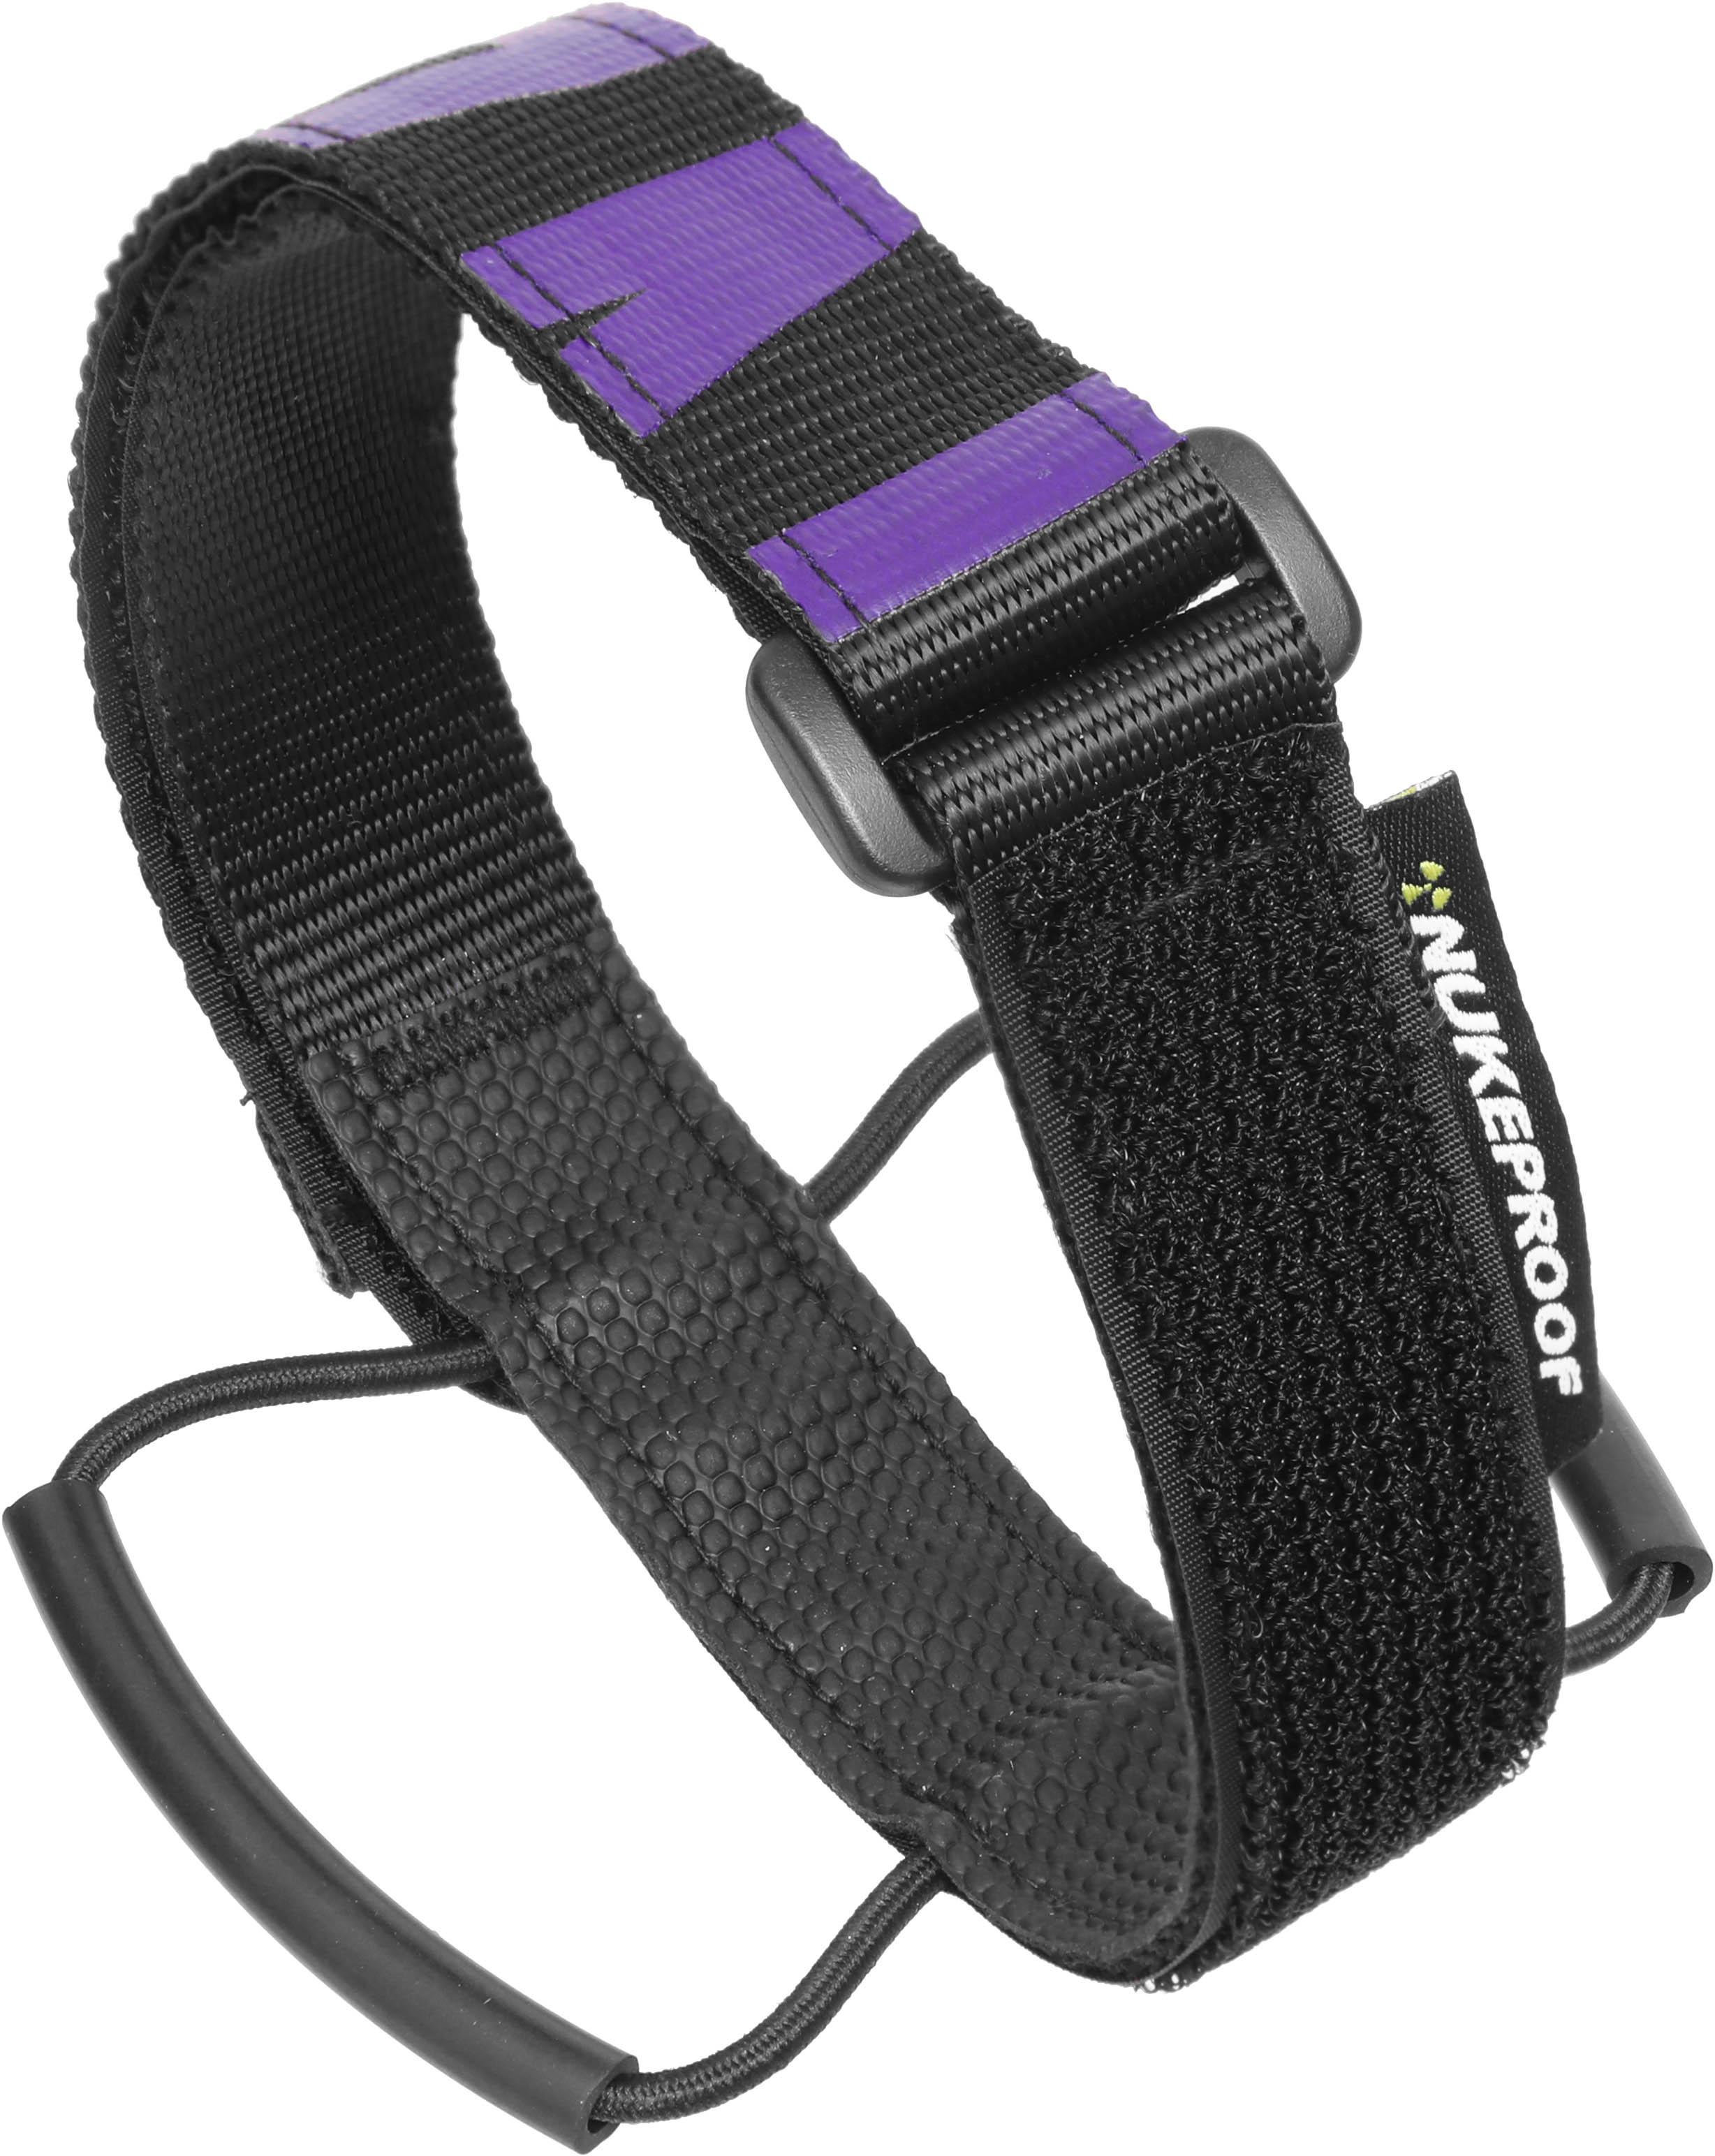 Nukeproof Horizon Enduro Strap - Black/purple